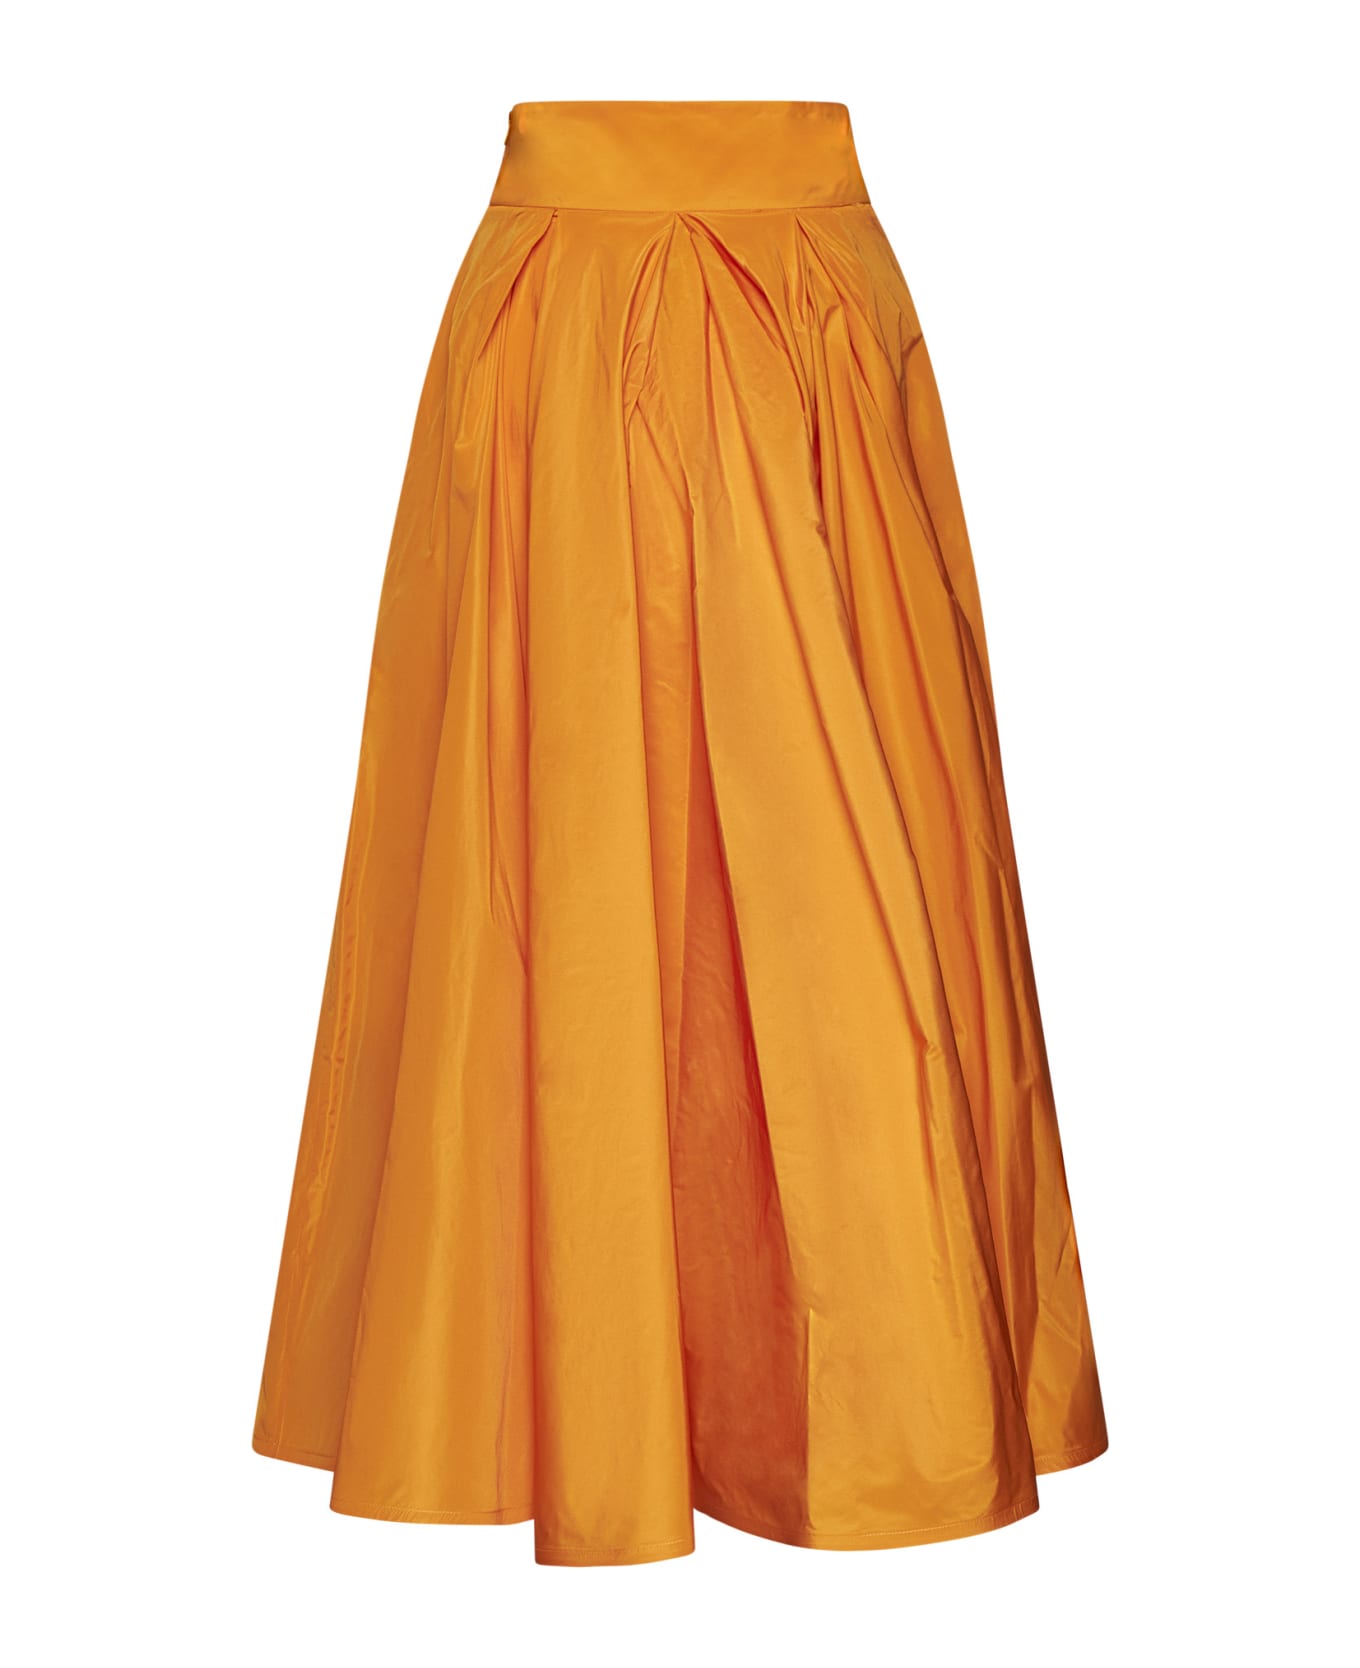 Sara Roka Skirt - Arancione スカート